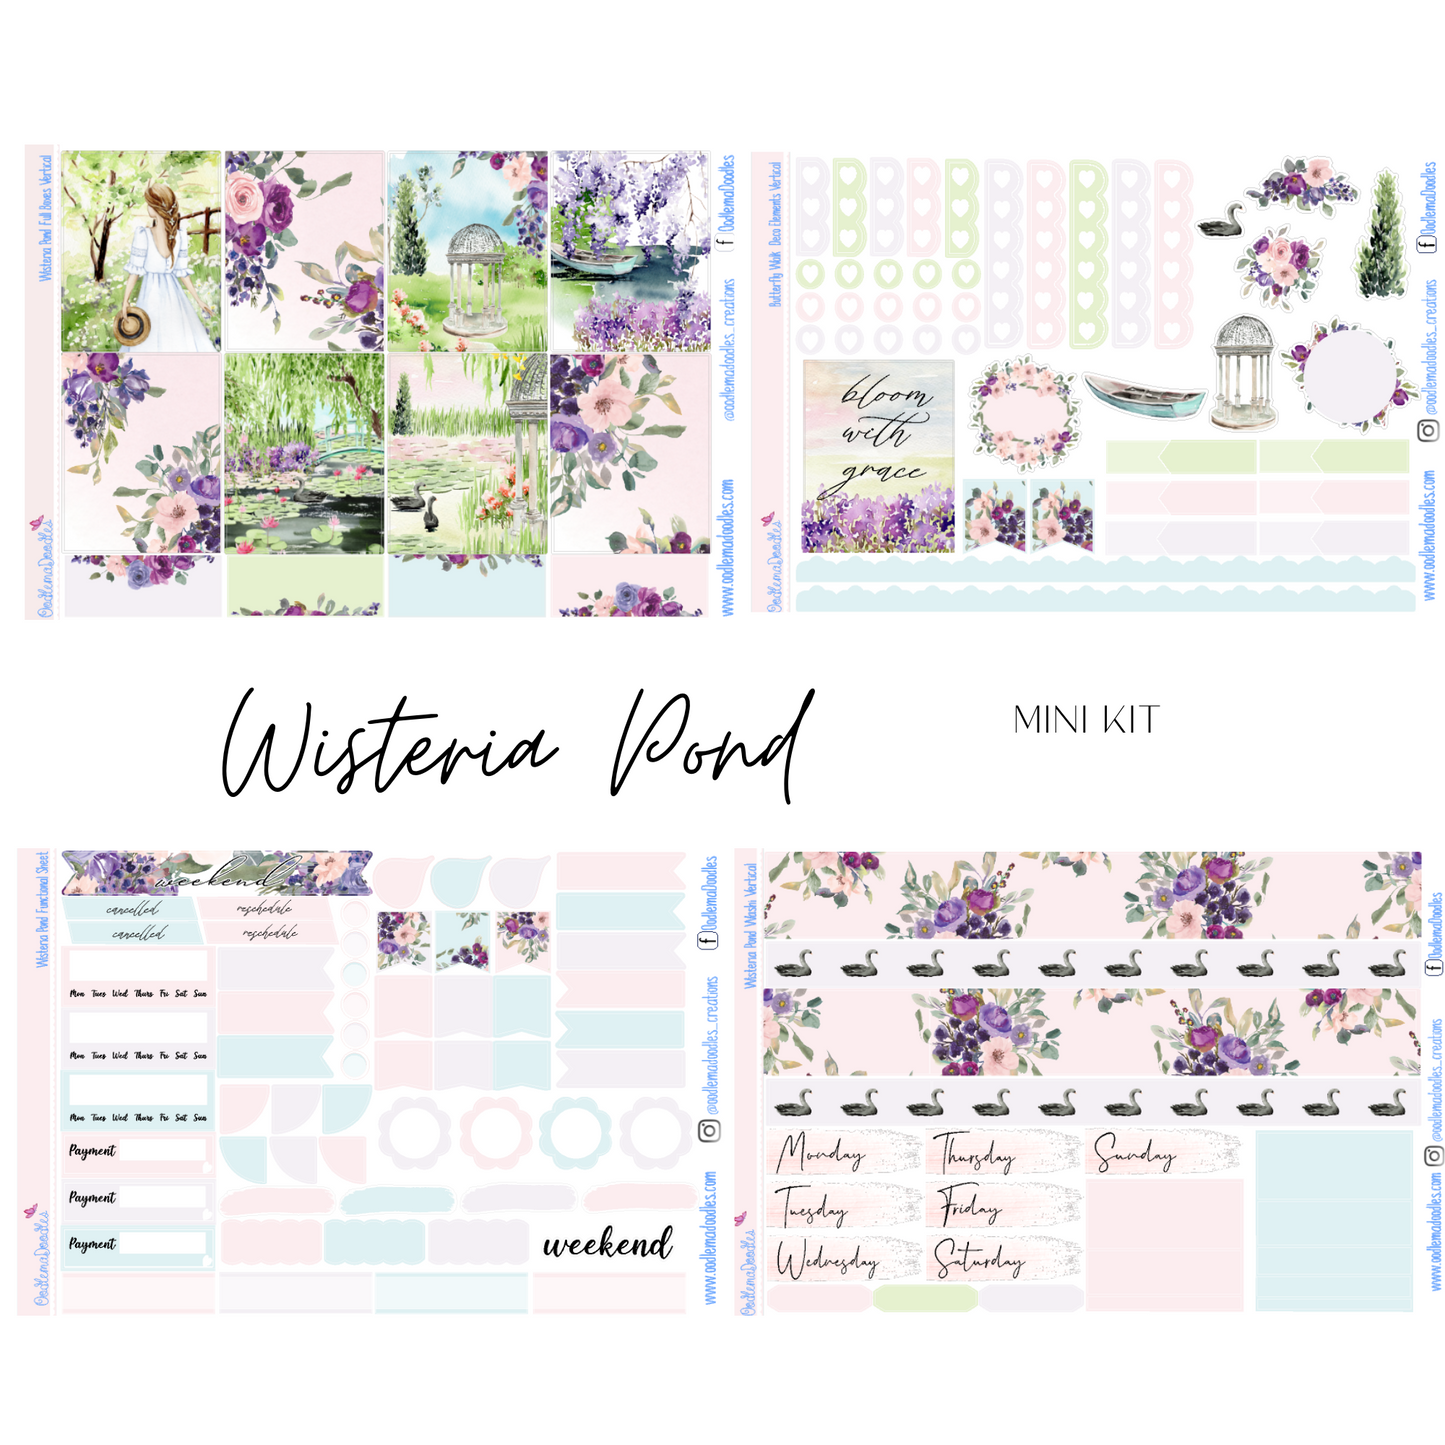 Wisteria Pond Mini Kit